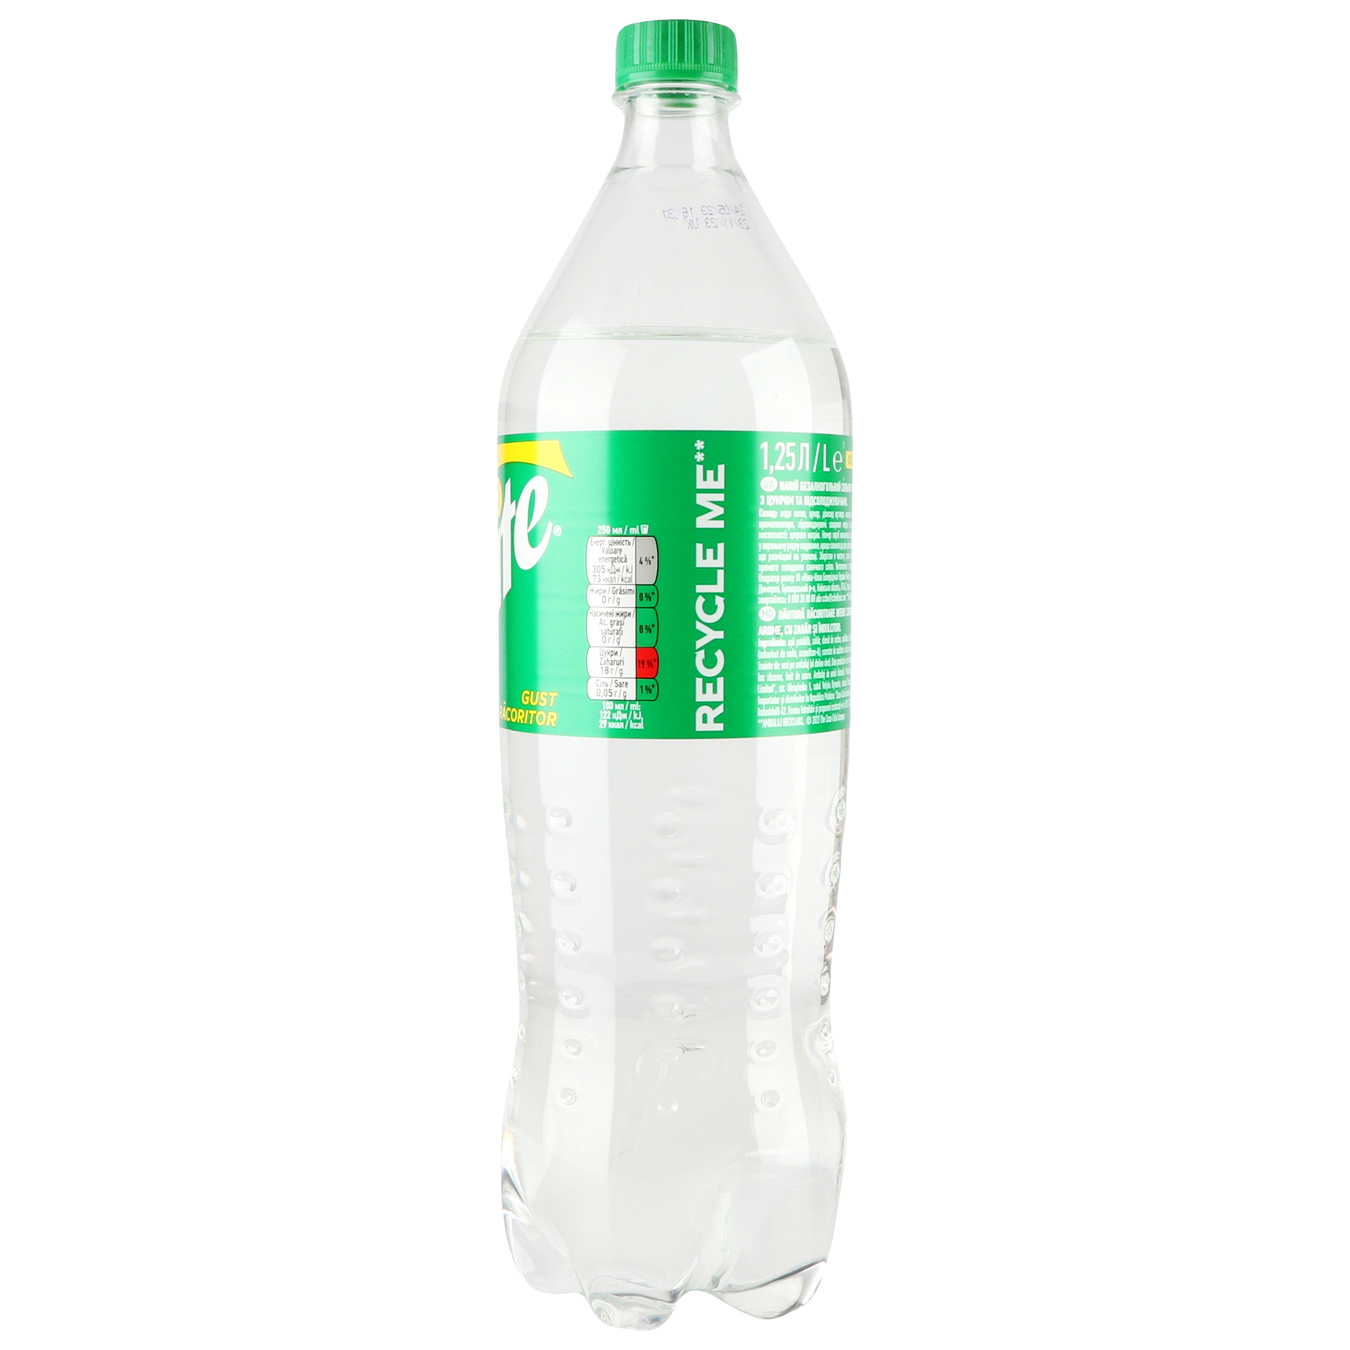 Carbonated drink Sprite 1.25 l PET 3